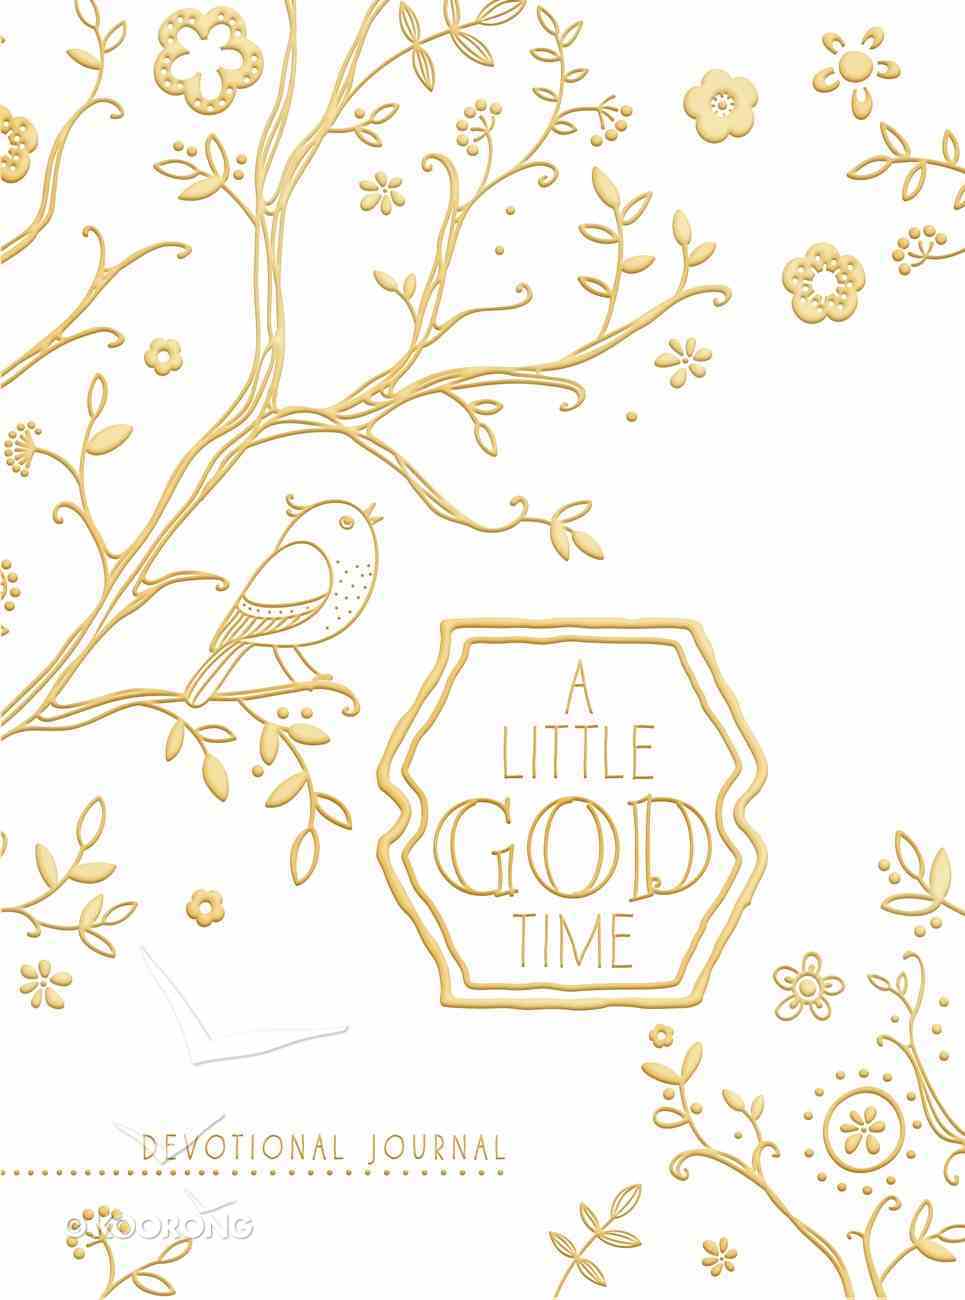 A Little God Time: A Devotional Journal (Gold/white) Hardback